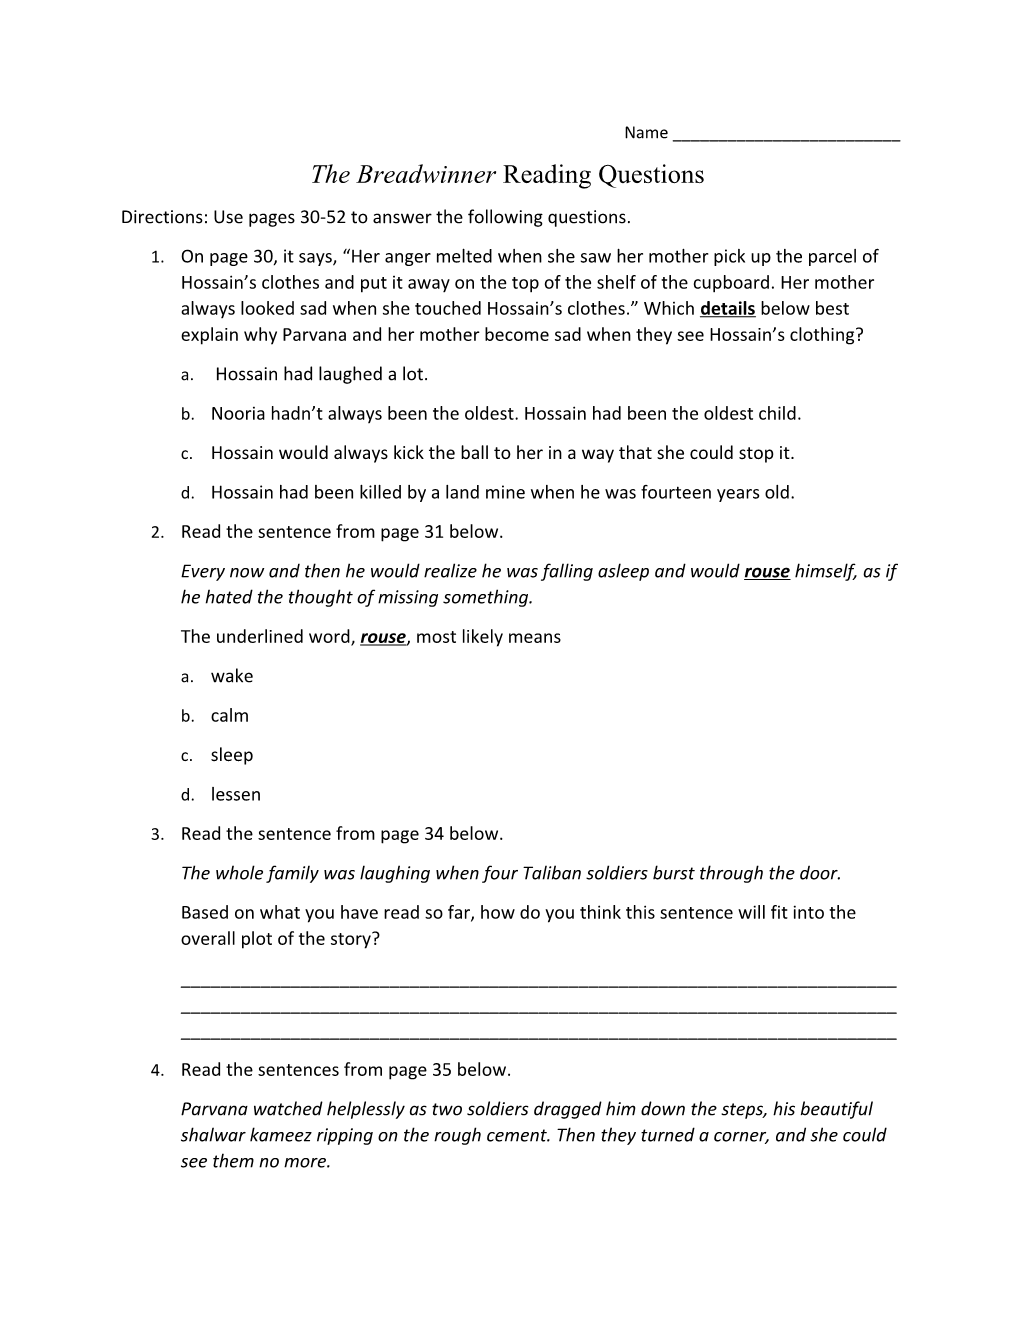 The Breadwinner Reading Questions